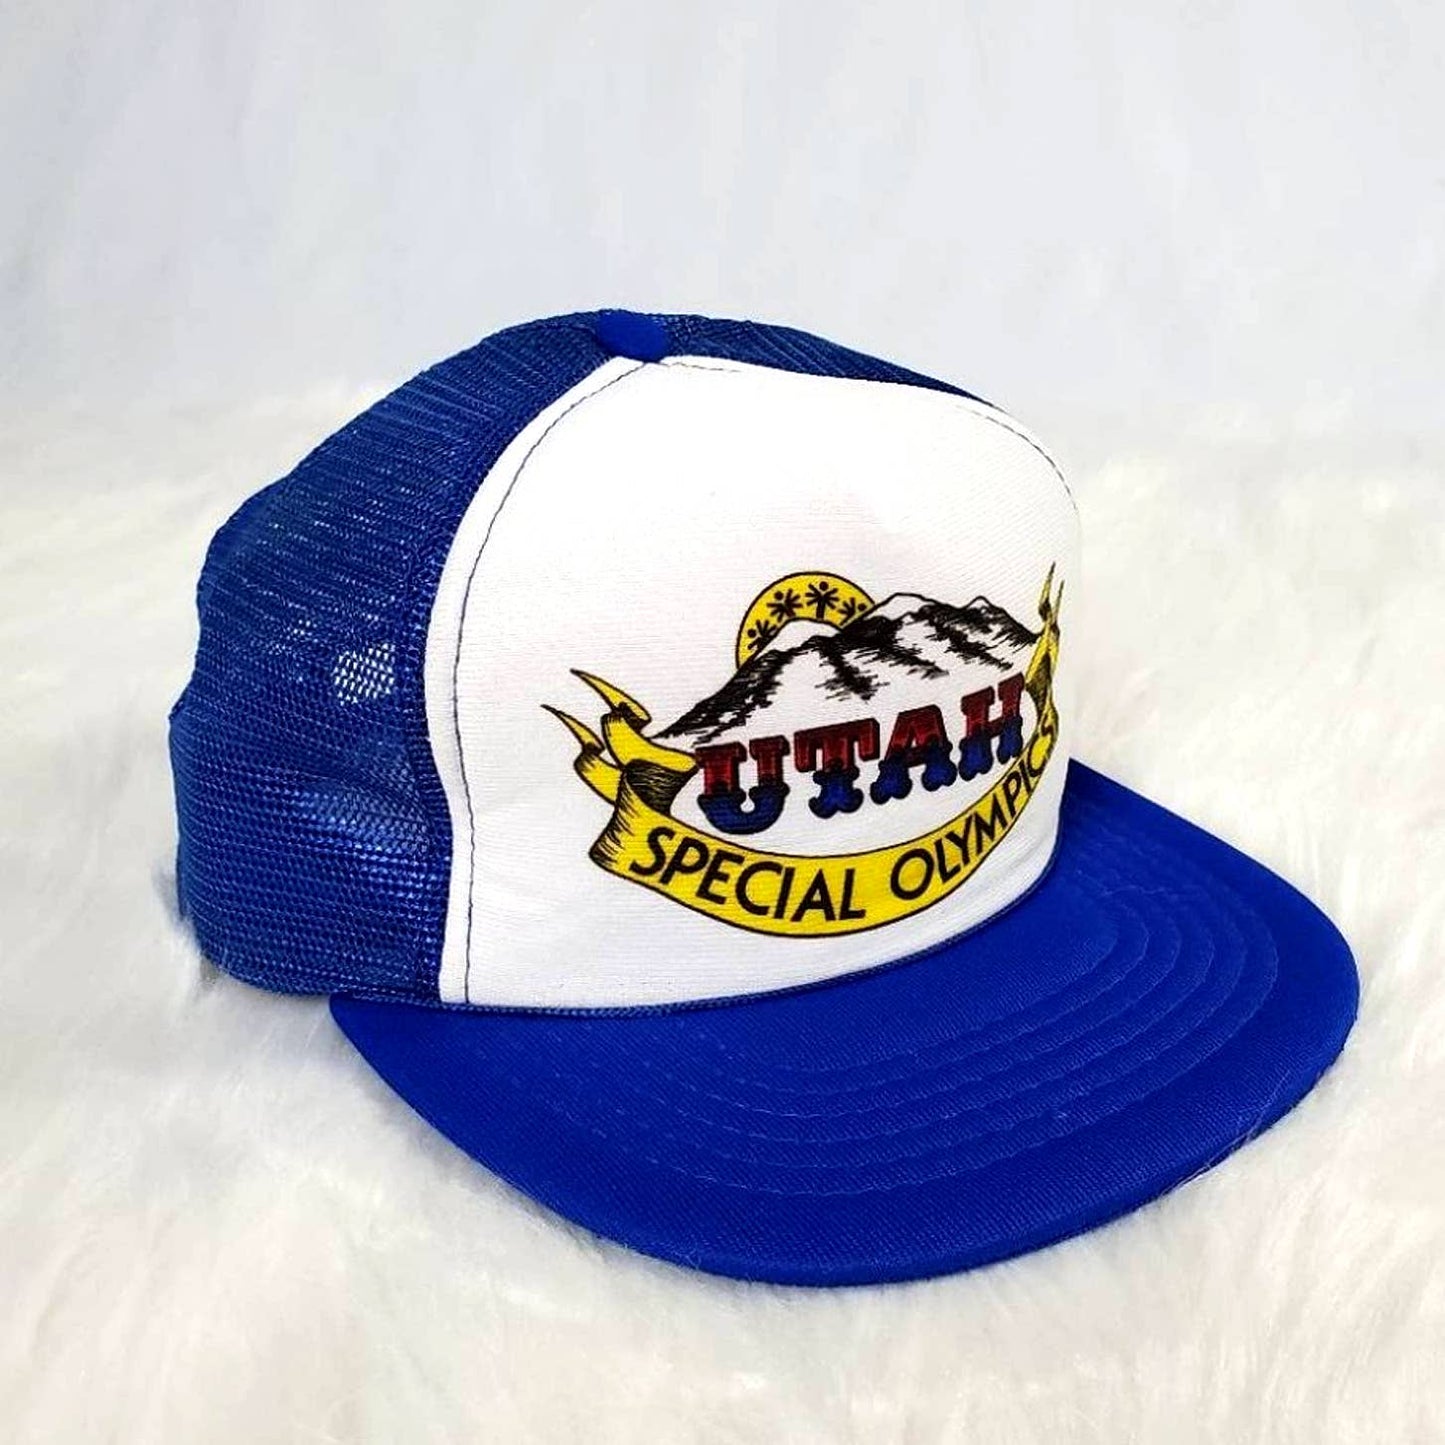 1980s Vintage Utah Special Olympics Snapback